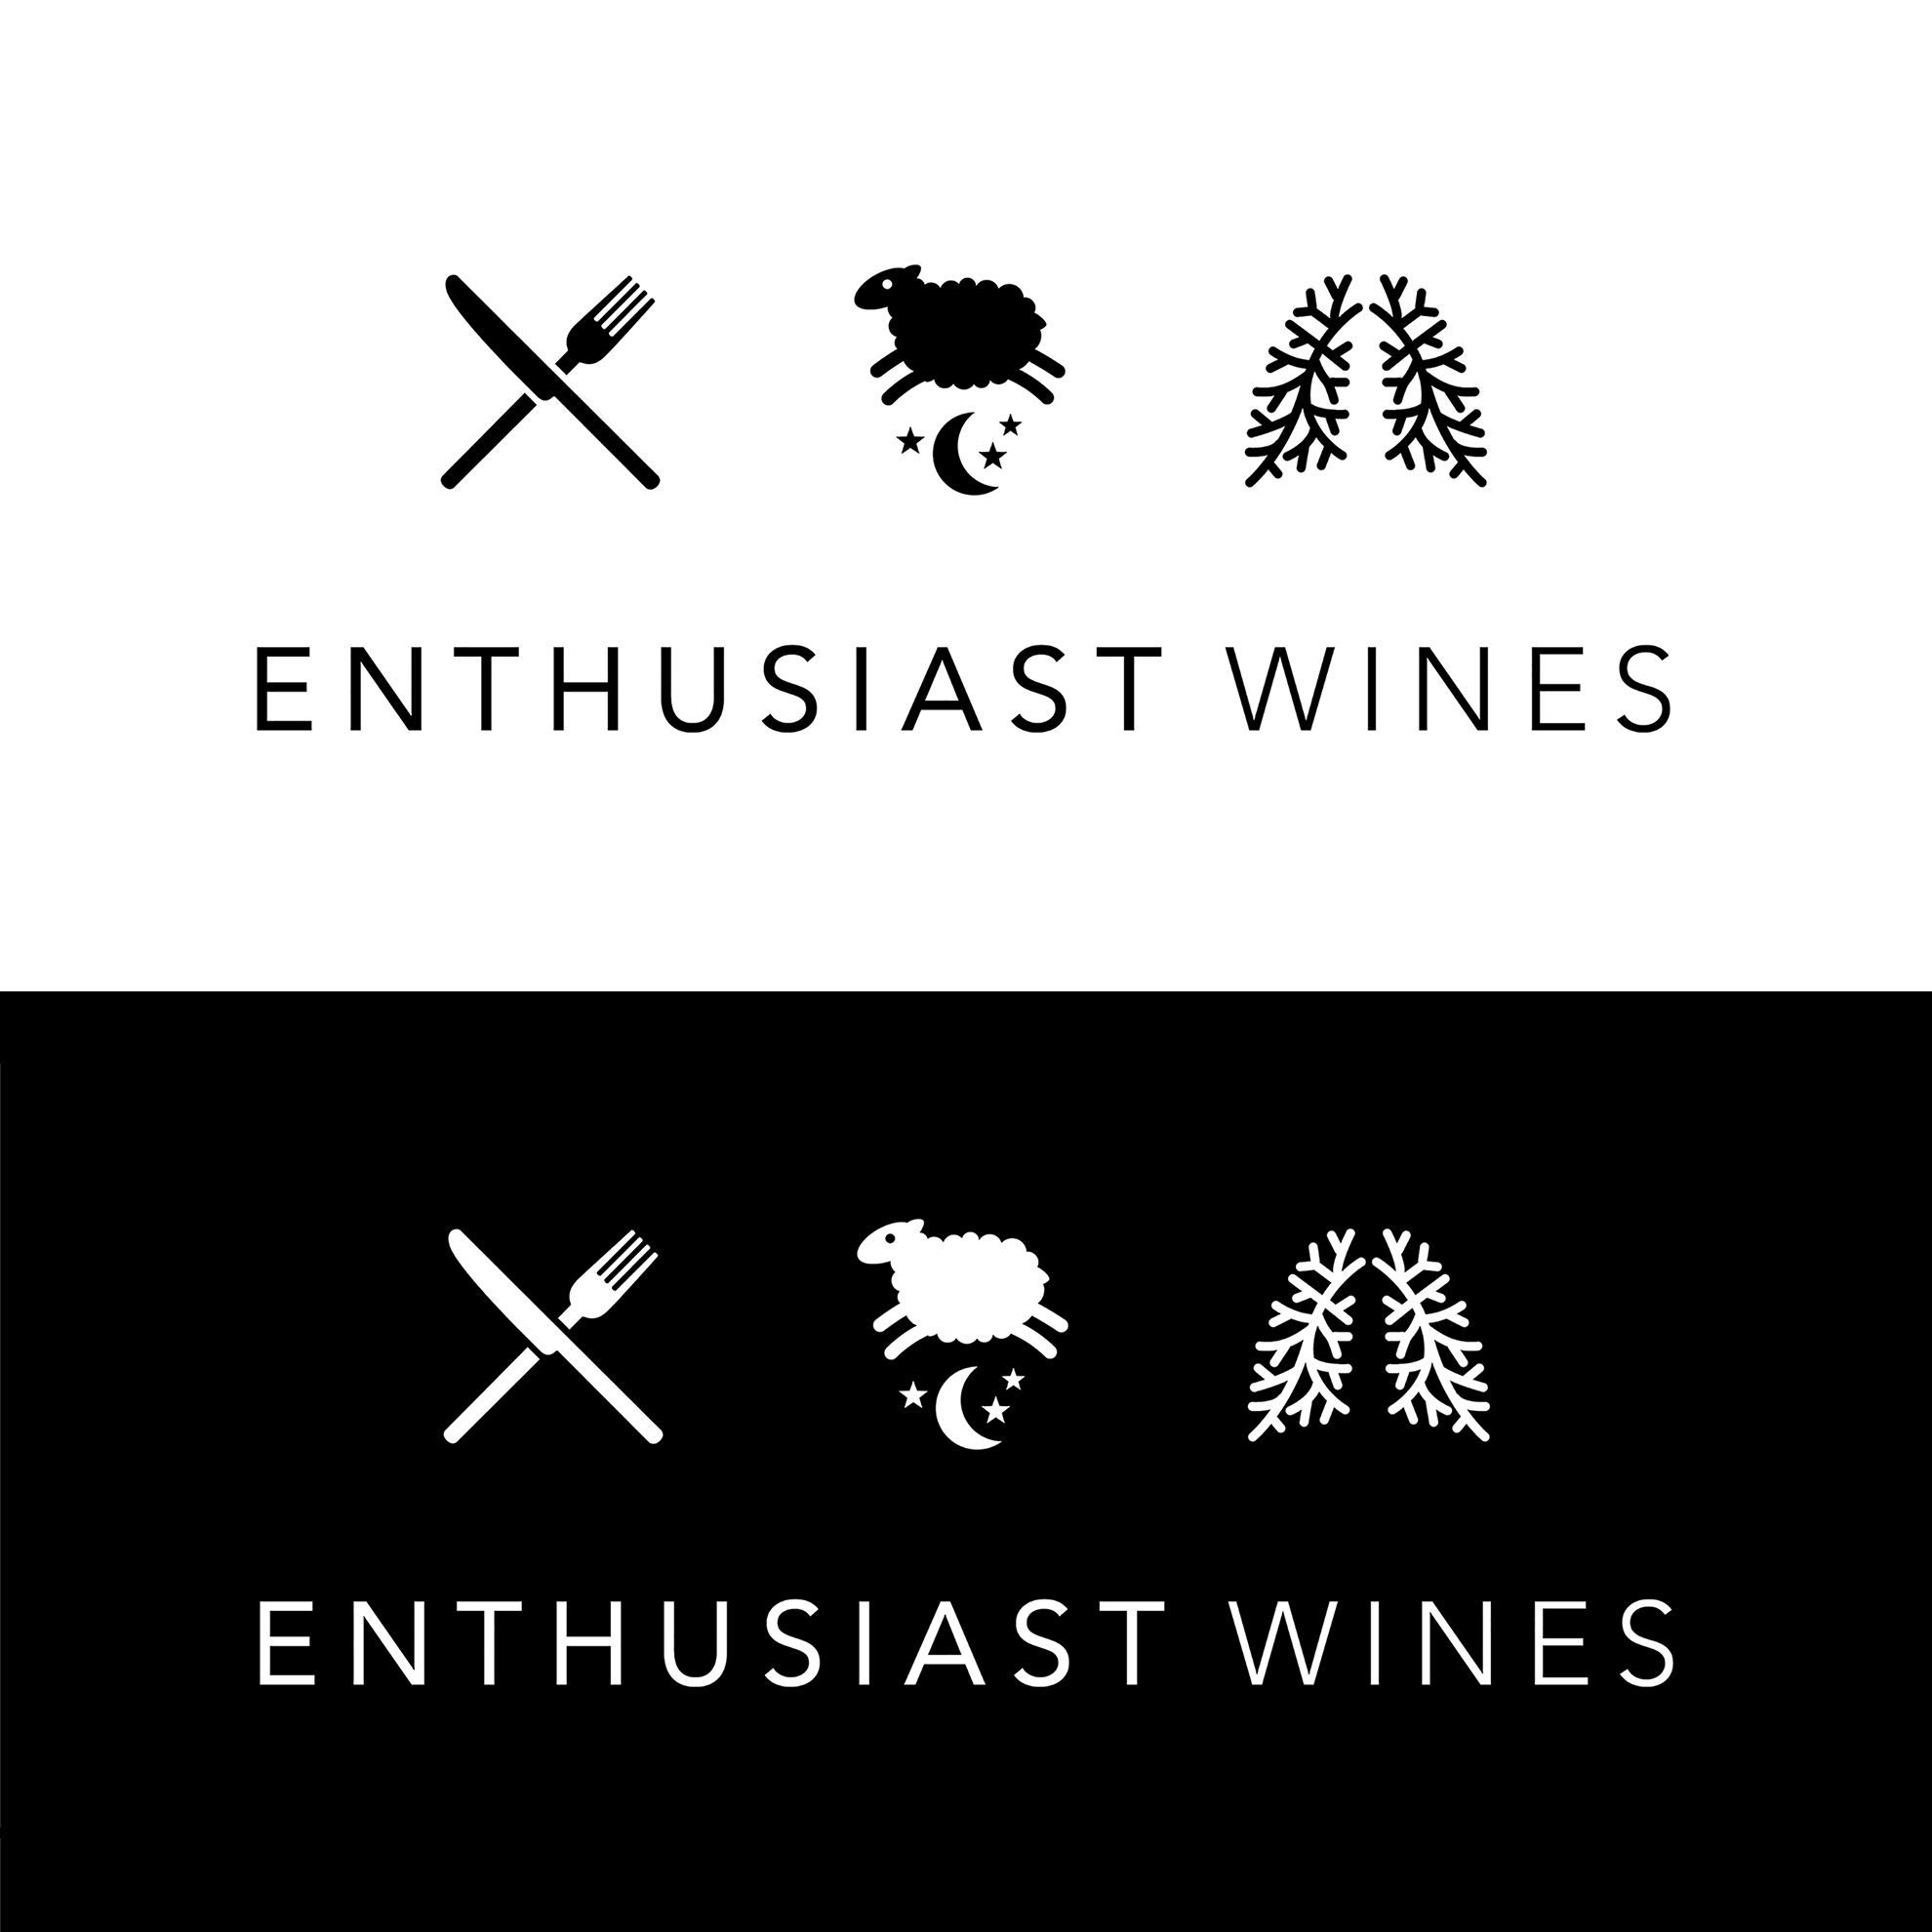 Enthusiast Wines Symbols